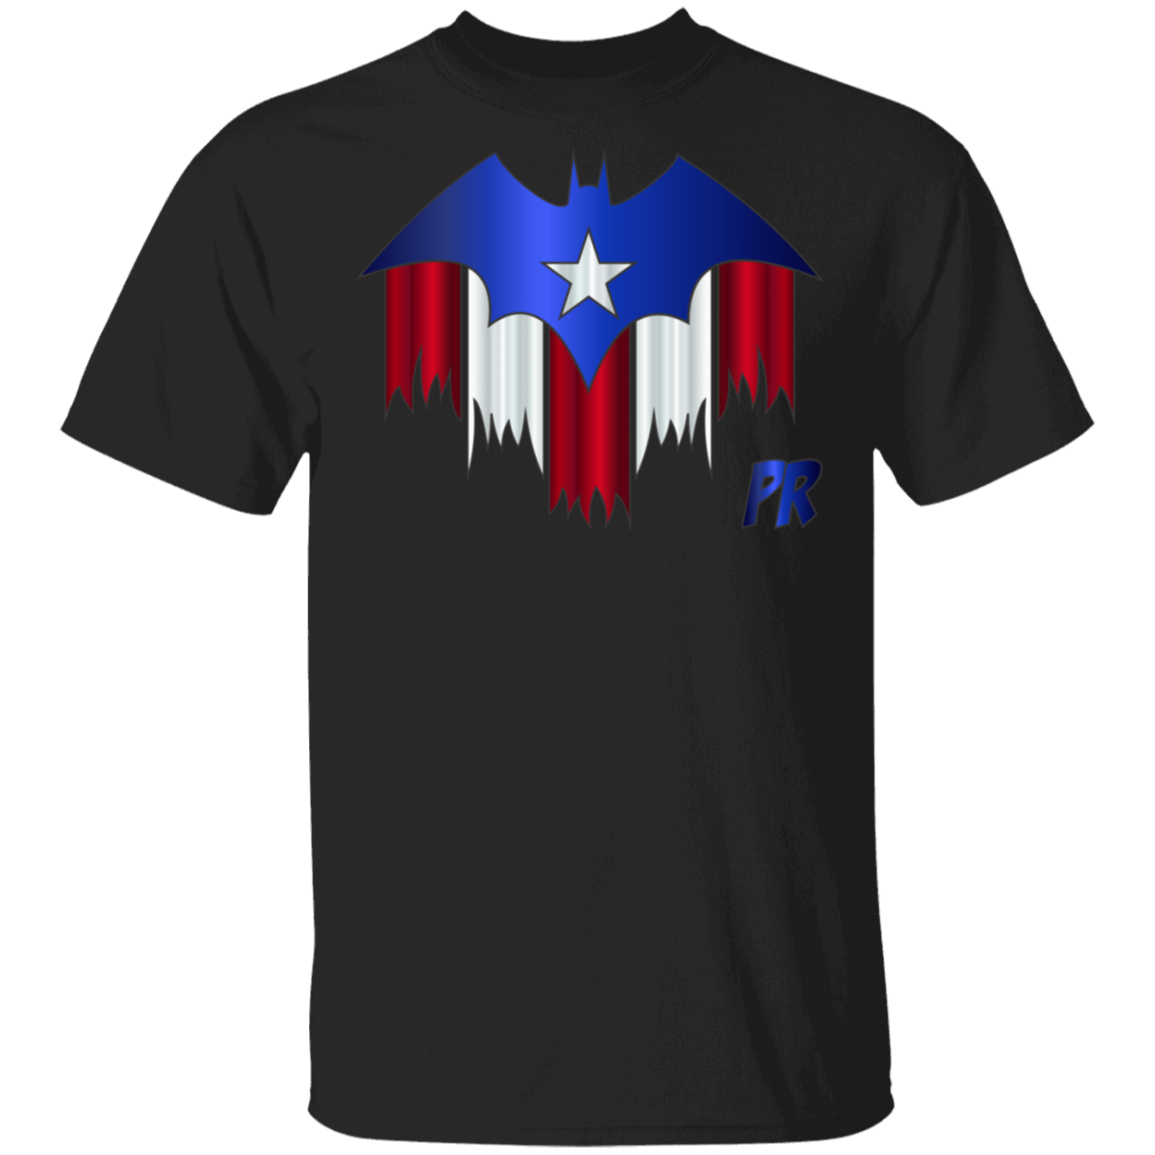 PR BATMAN 5.3 oz. T-Shirt - Puerto Rican Pride